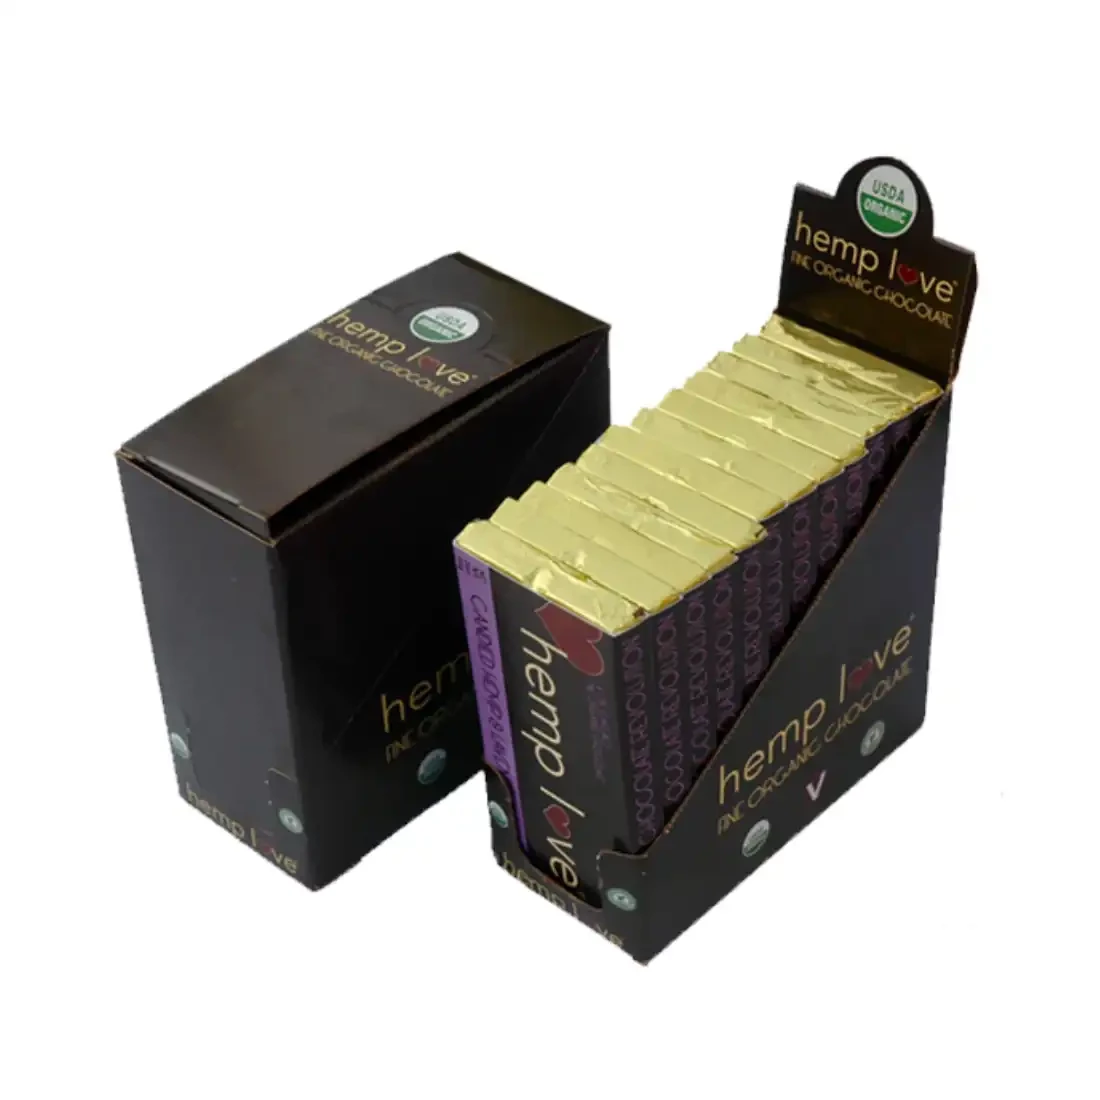 custom-hemp-chocolate-boxes